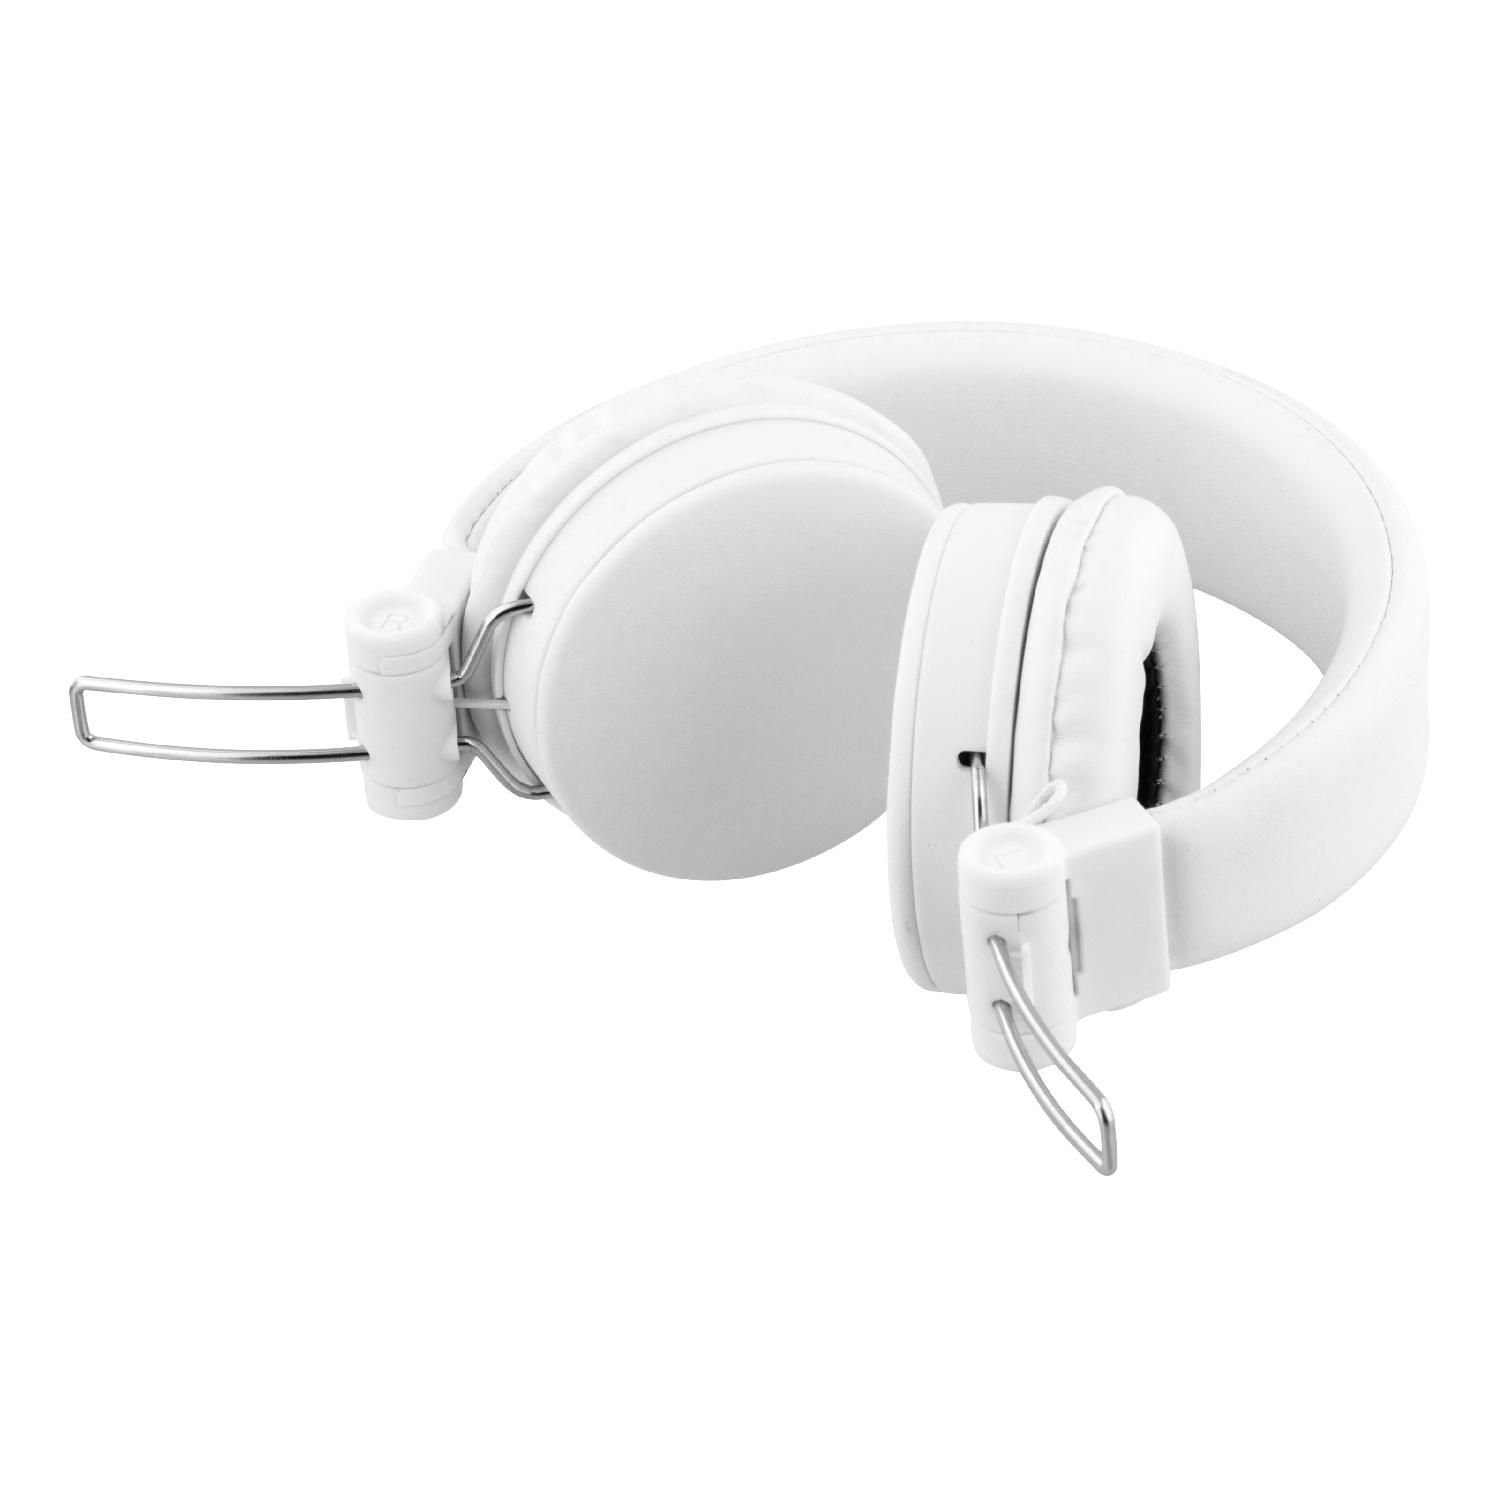 Klinkenanschluss Headset, On-Ear-Kopfhörer Mikrofon, Herstellergarantie) faltbares Kabel weiß 3.5mm (integriertes STREETZ Kopfhörer Ohrpolster Jahre inkl. 1,2m 5